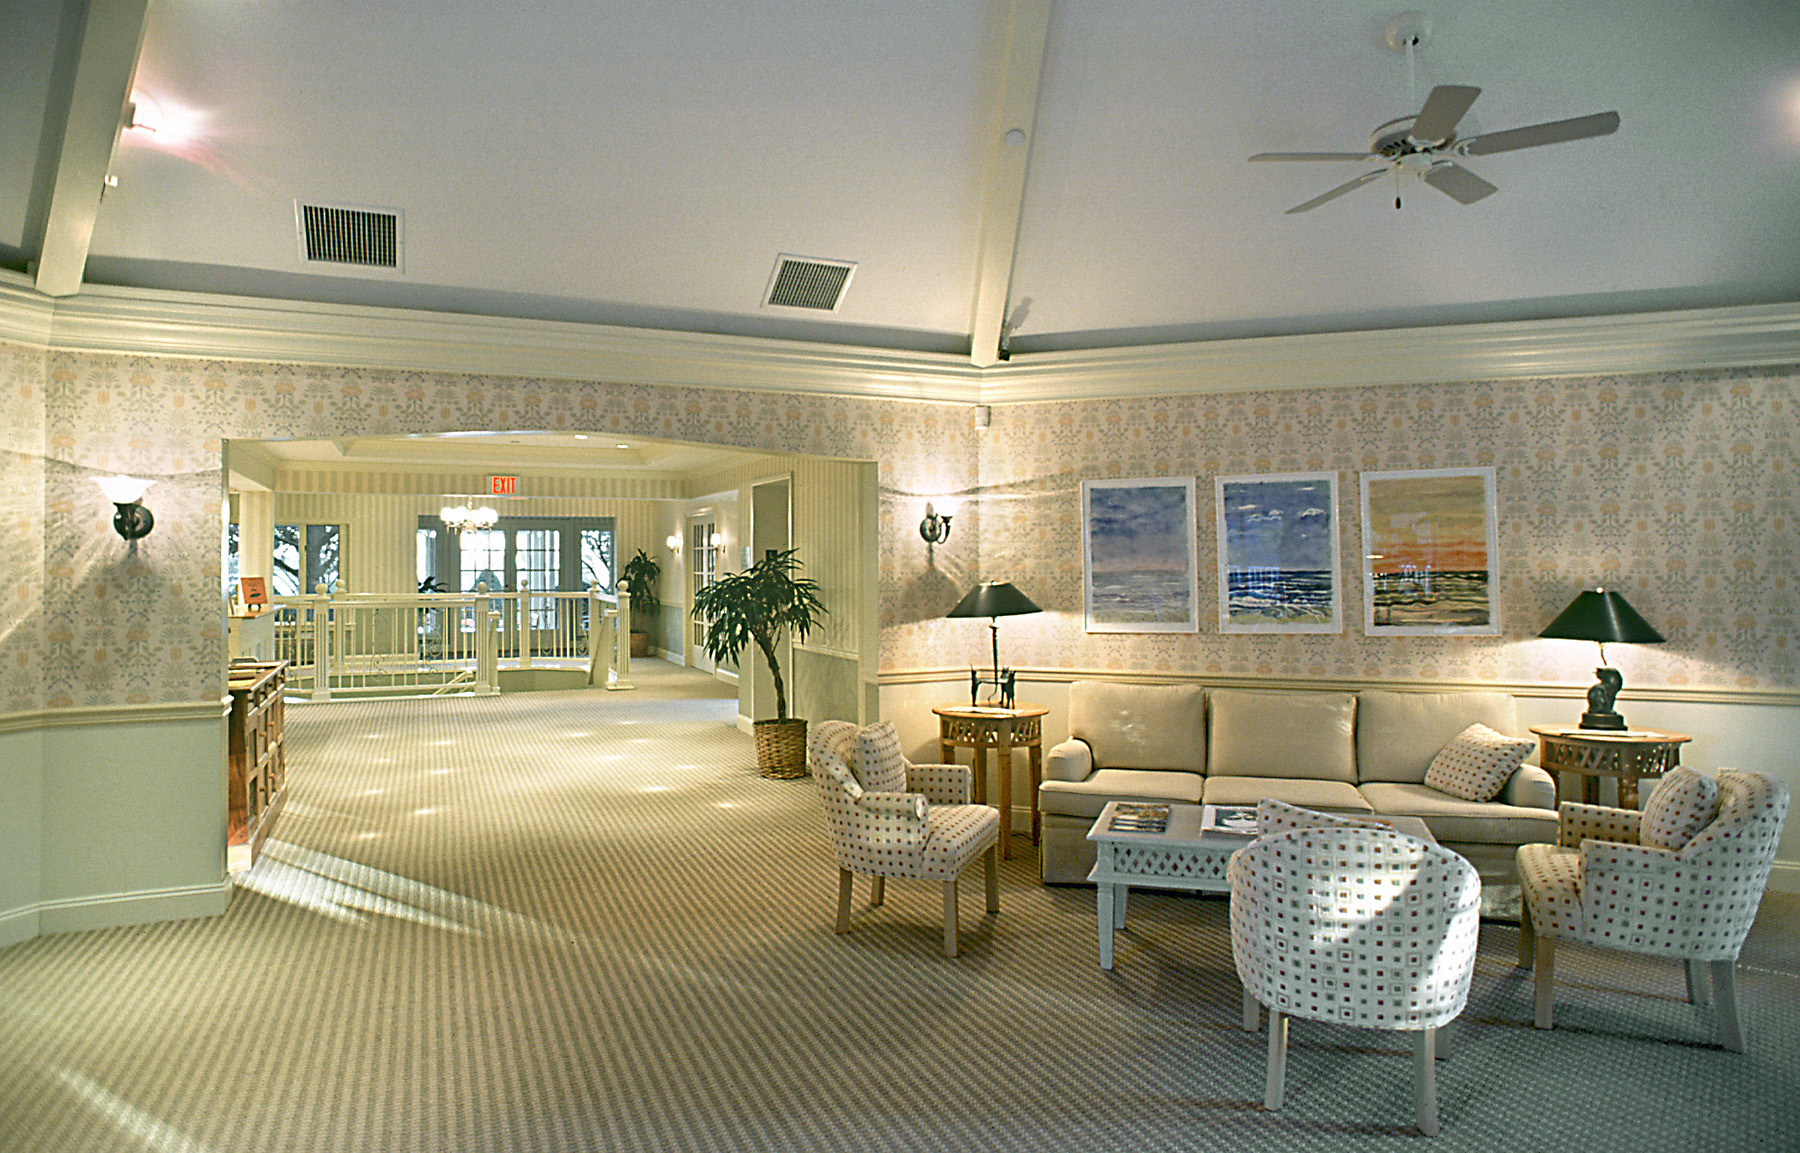 Southhamton Inn. Tobin Parnes Design. NY. Hospitality Design. Lounge Area.